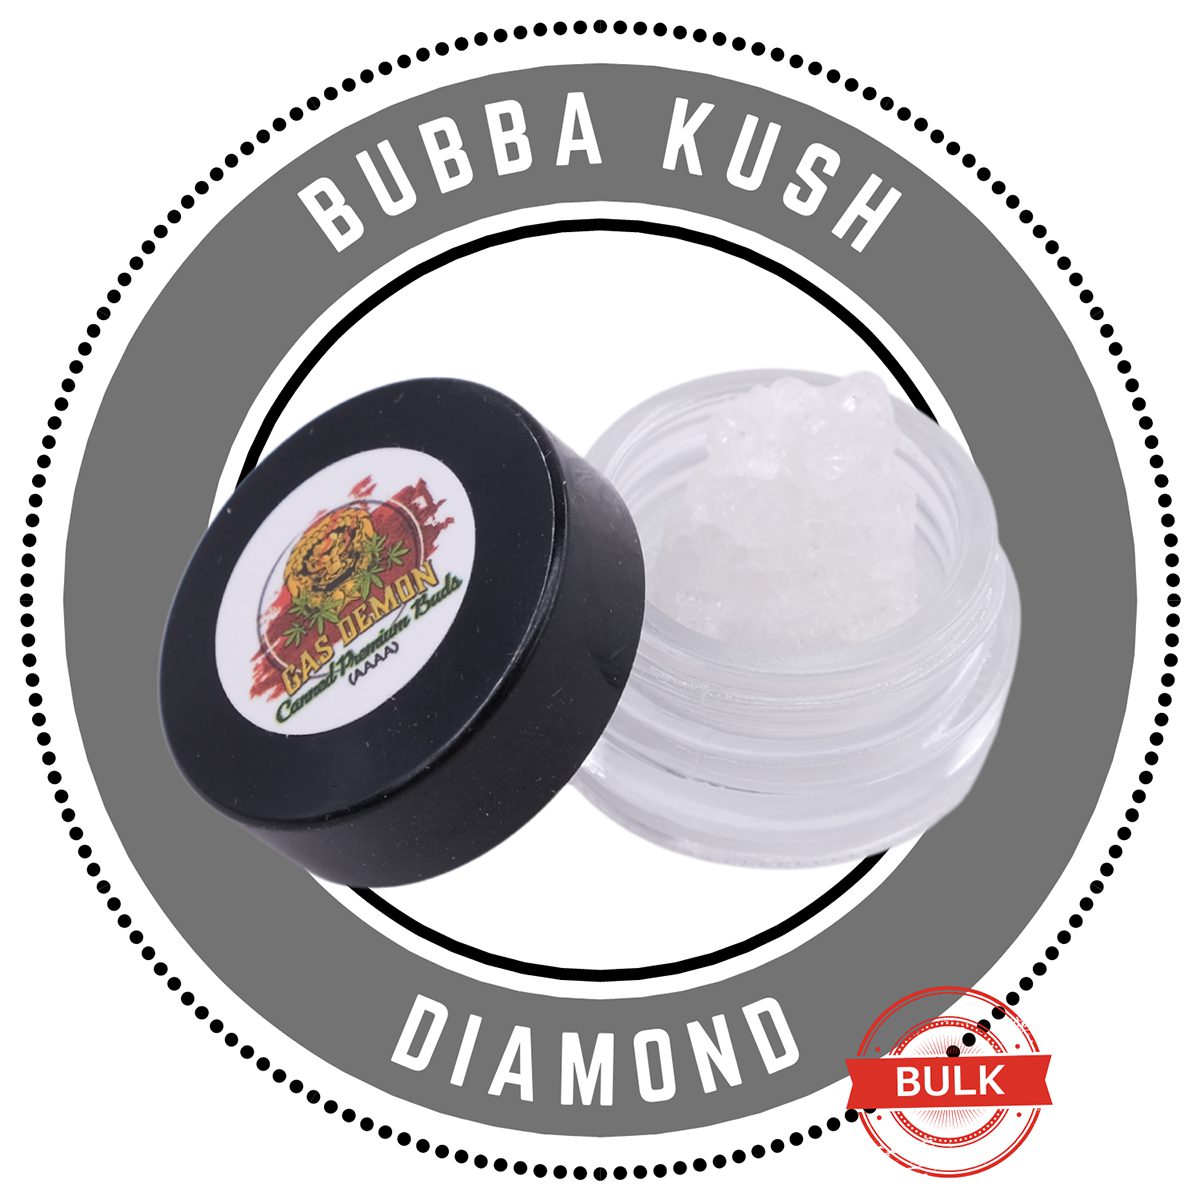 Bubba Kush Diamond Indica Dominant Hybrid By Gas Demon bulk